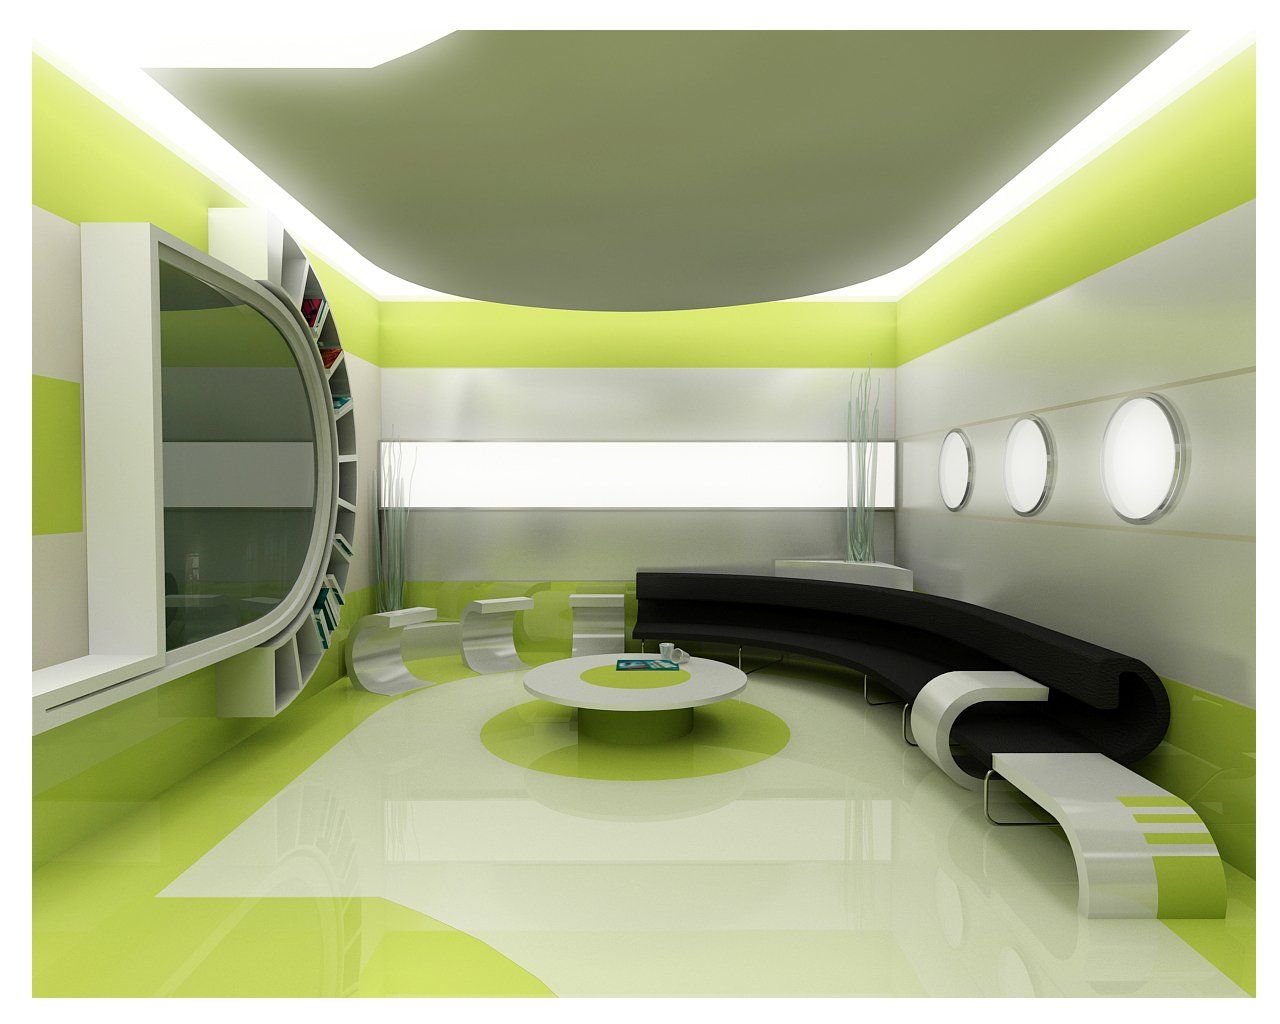 http://myjournal4all.files.wordpress.com/2011/05/green-interior-design-1-xh4anld0dx-1280x1024.jpg